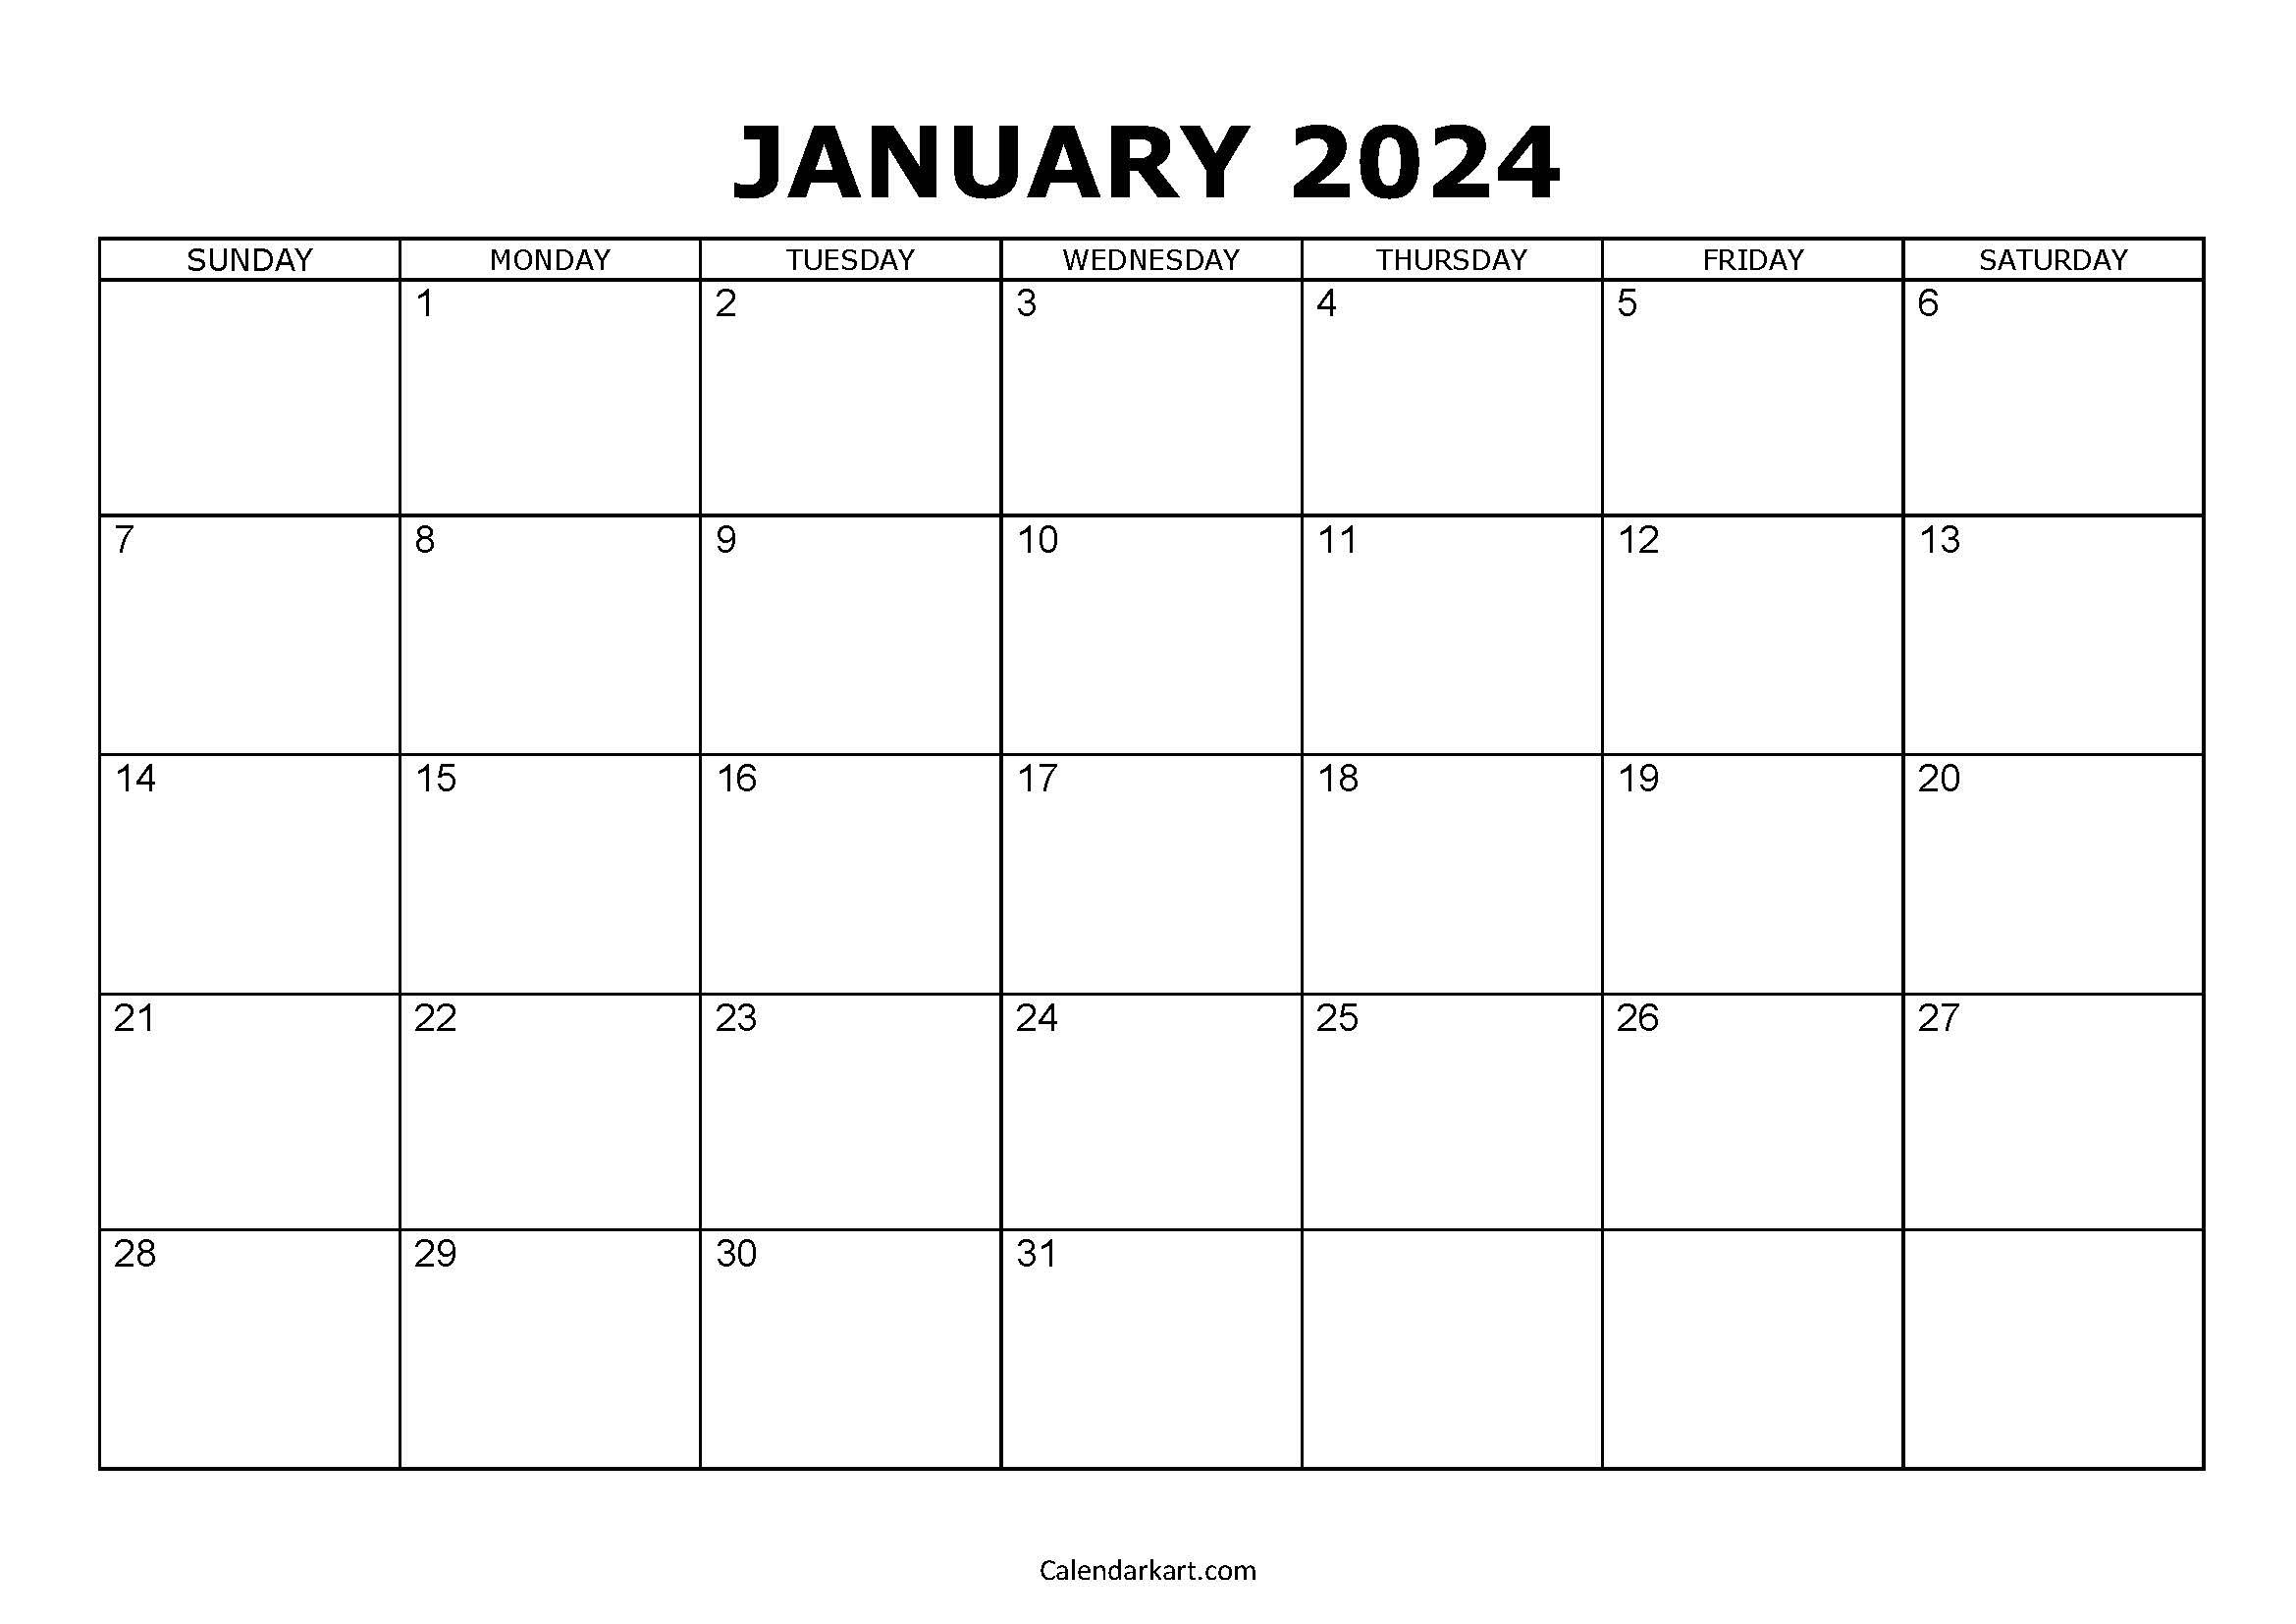 Free Printable January 2024 Calendars - Calendarkart with Free Printable Blank Calendar January 2024 Calendar Template